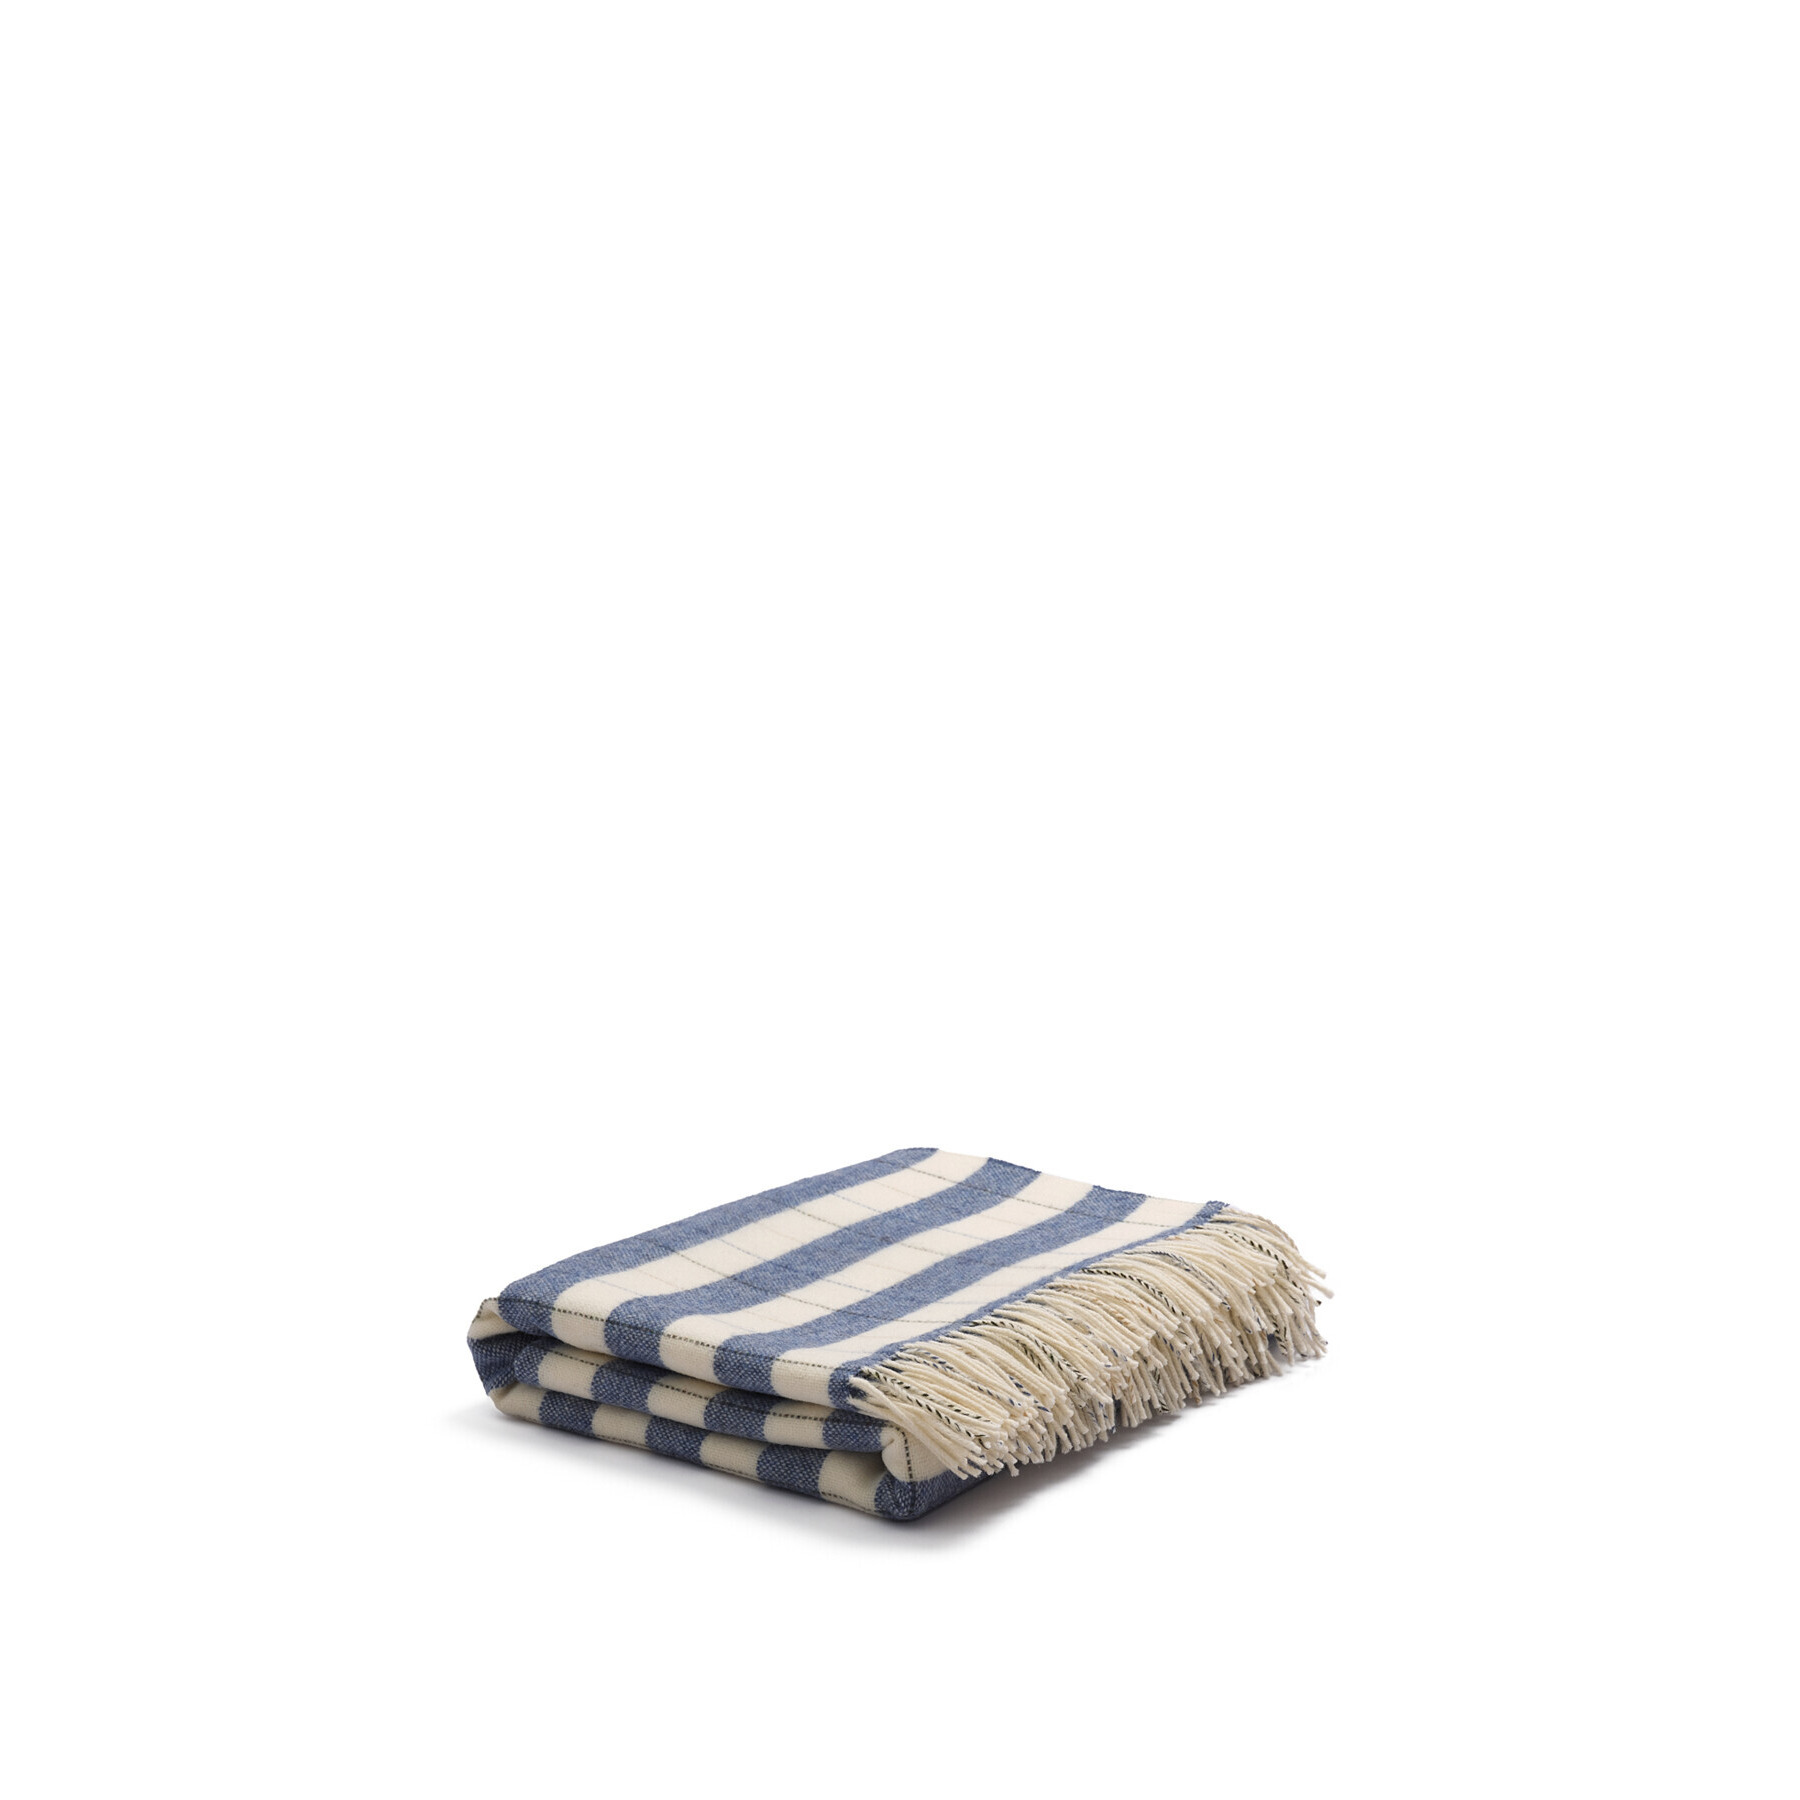 Piglet in Bed Merino Wool Blanket - Size 140x220cm Blue - image 1